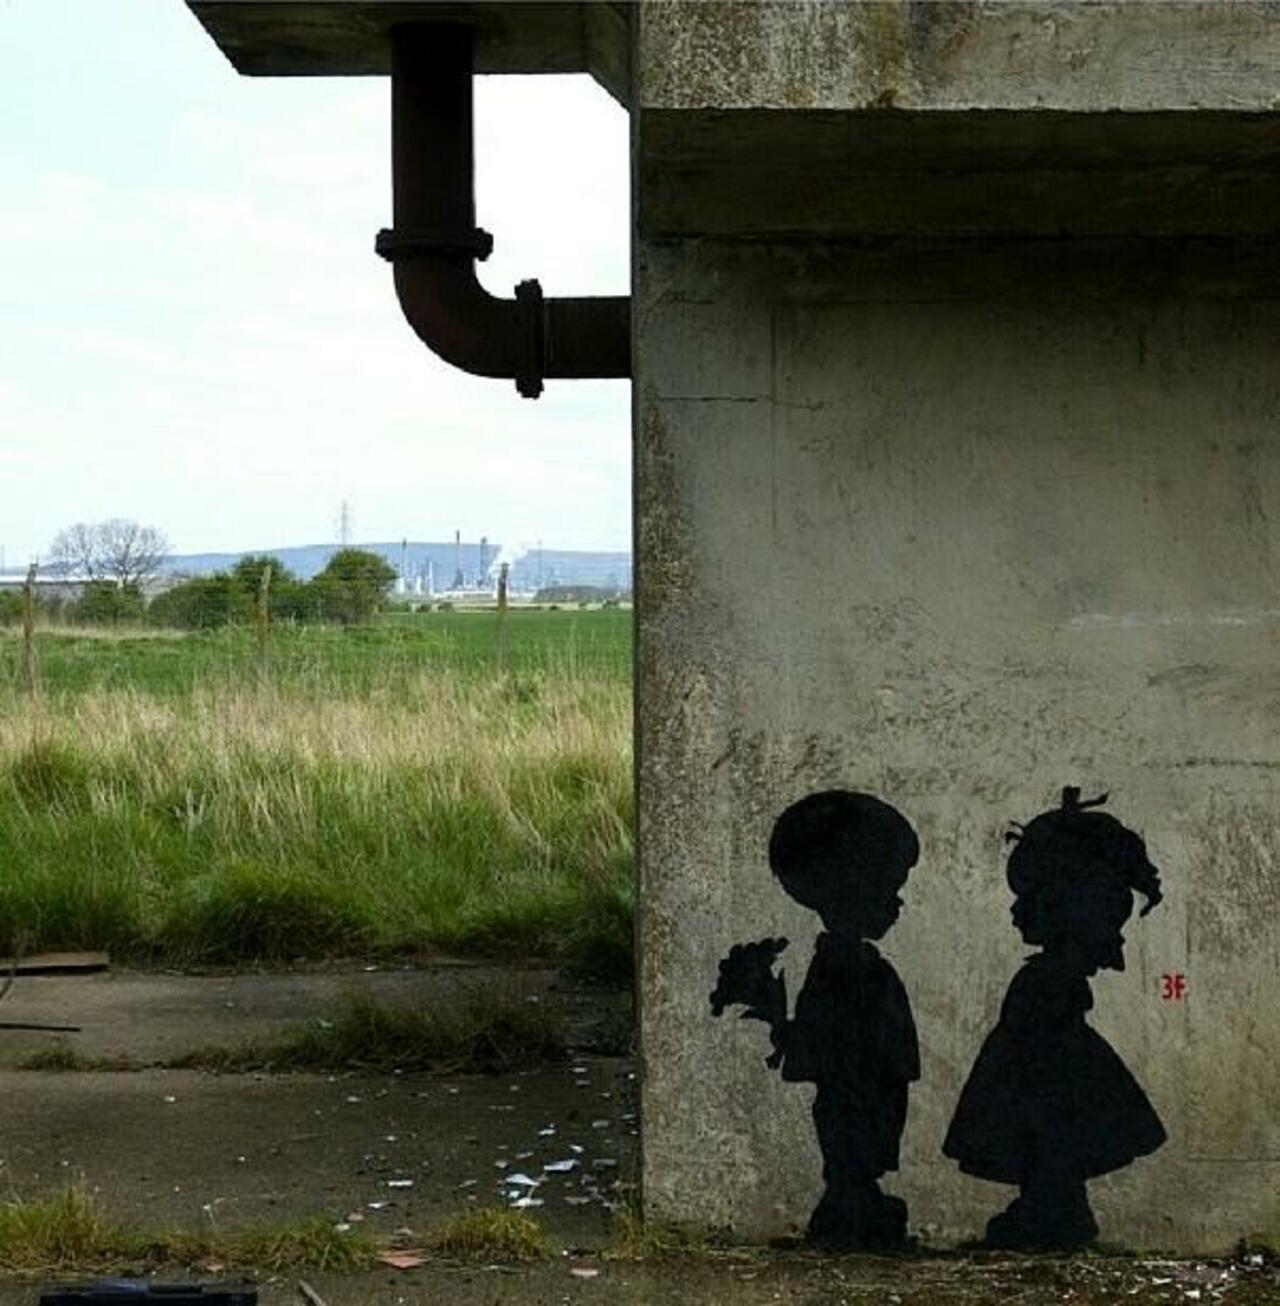 Found love in a hopeless place!

Street Art by 3fountains 

#art #mural #graffiti #streetart http://t.co/9aN79r3glW